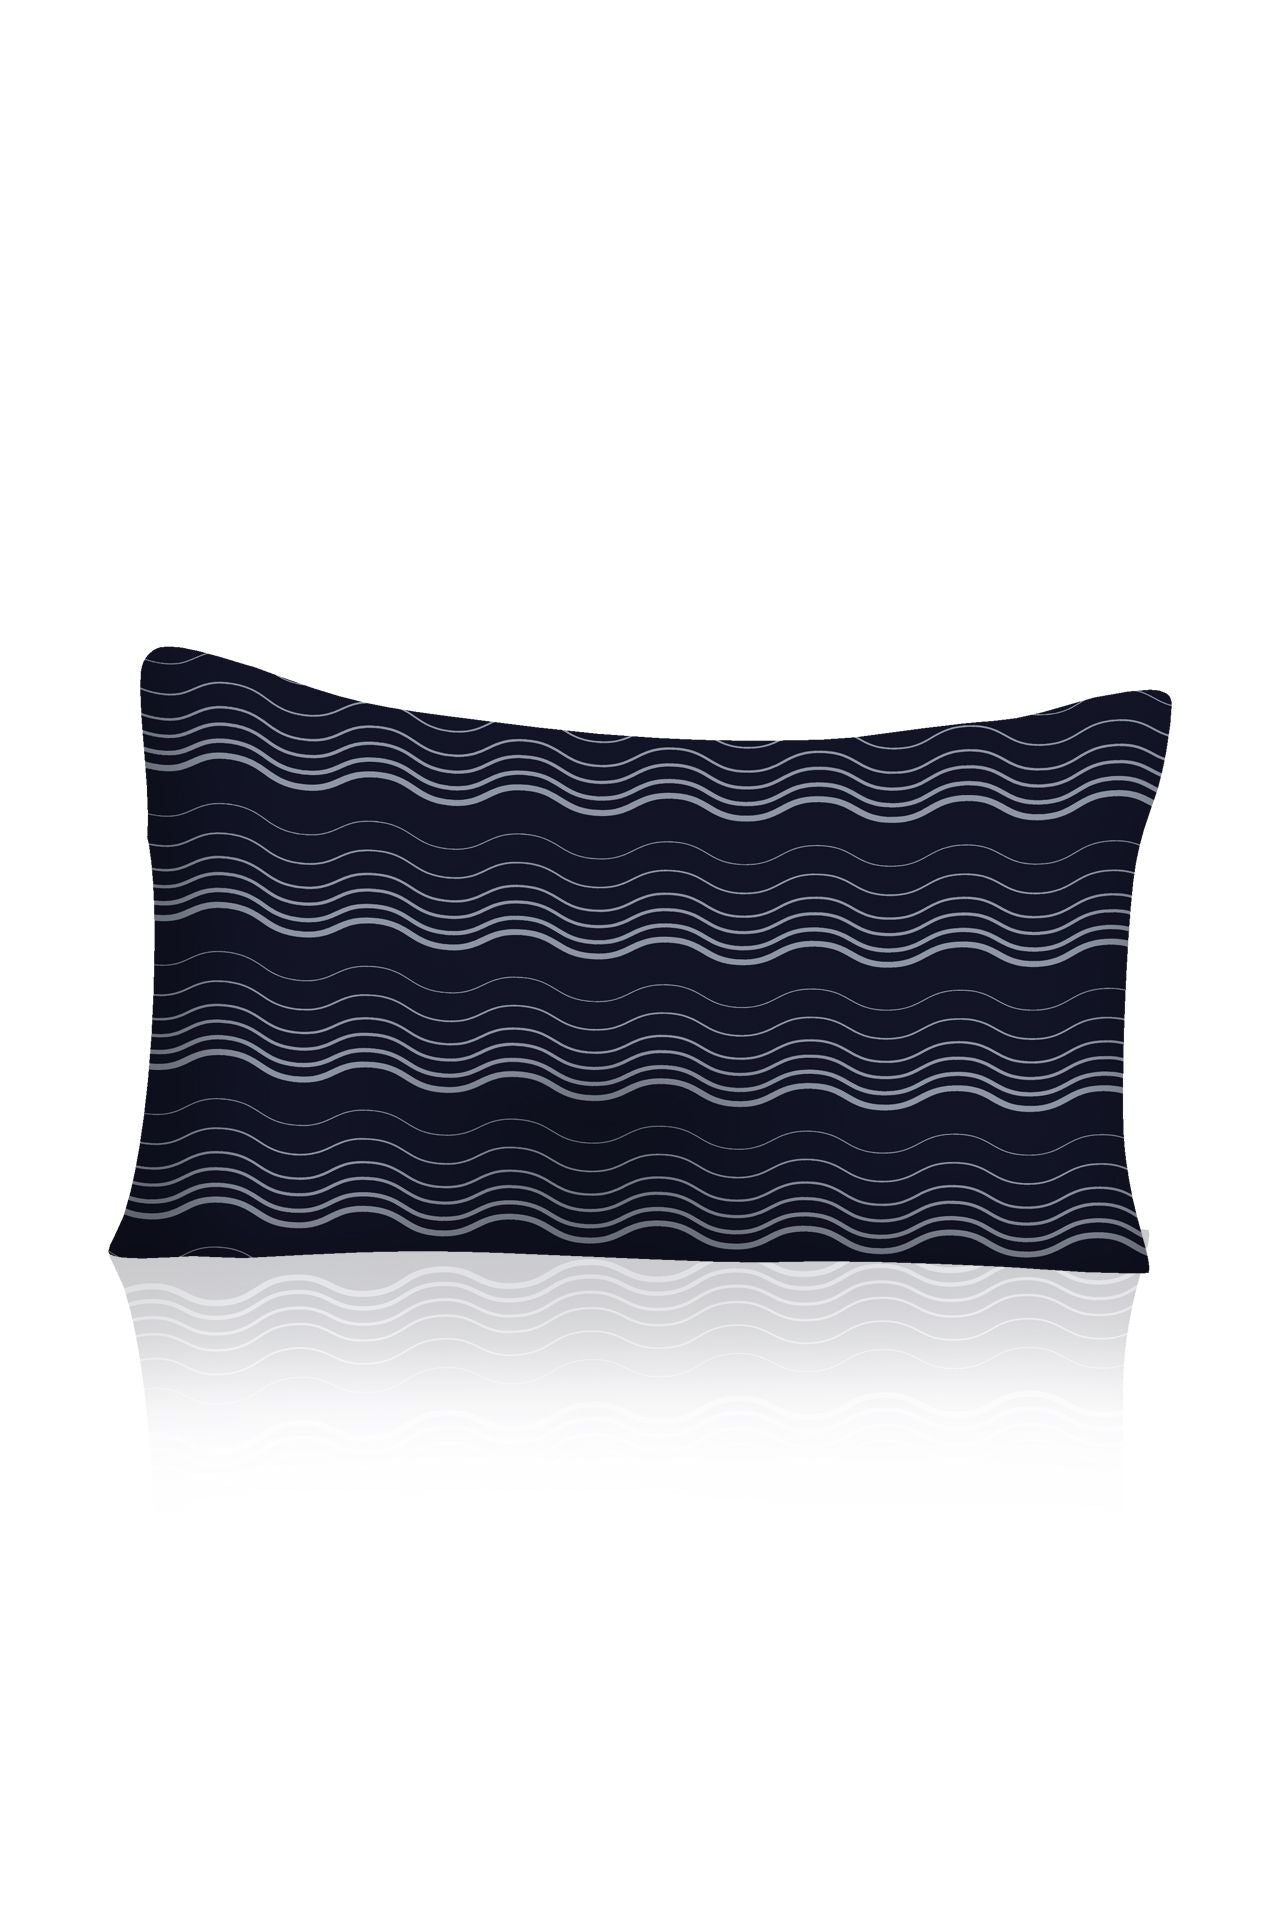 "dark throw pillows" "Kyle X Shahida" "designer decorative pillows" "pillows for beds decorative"